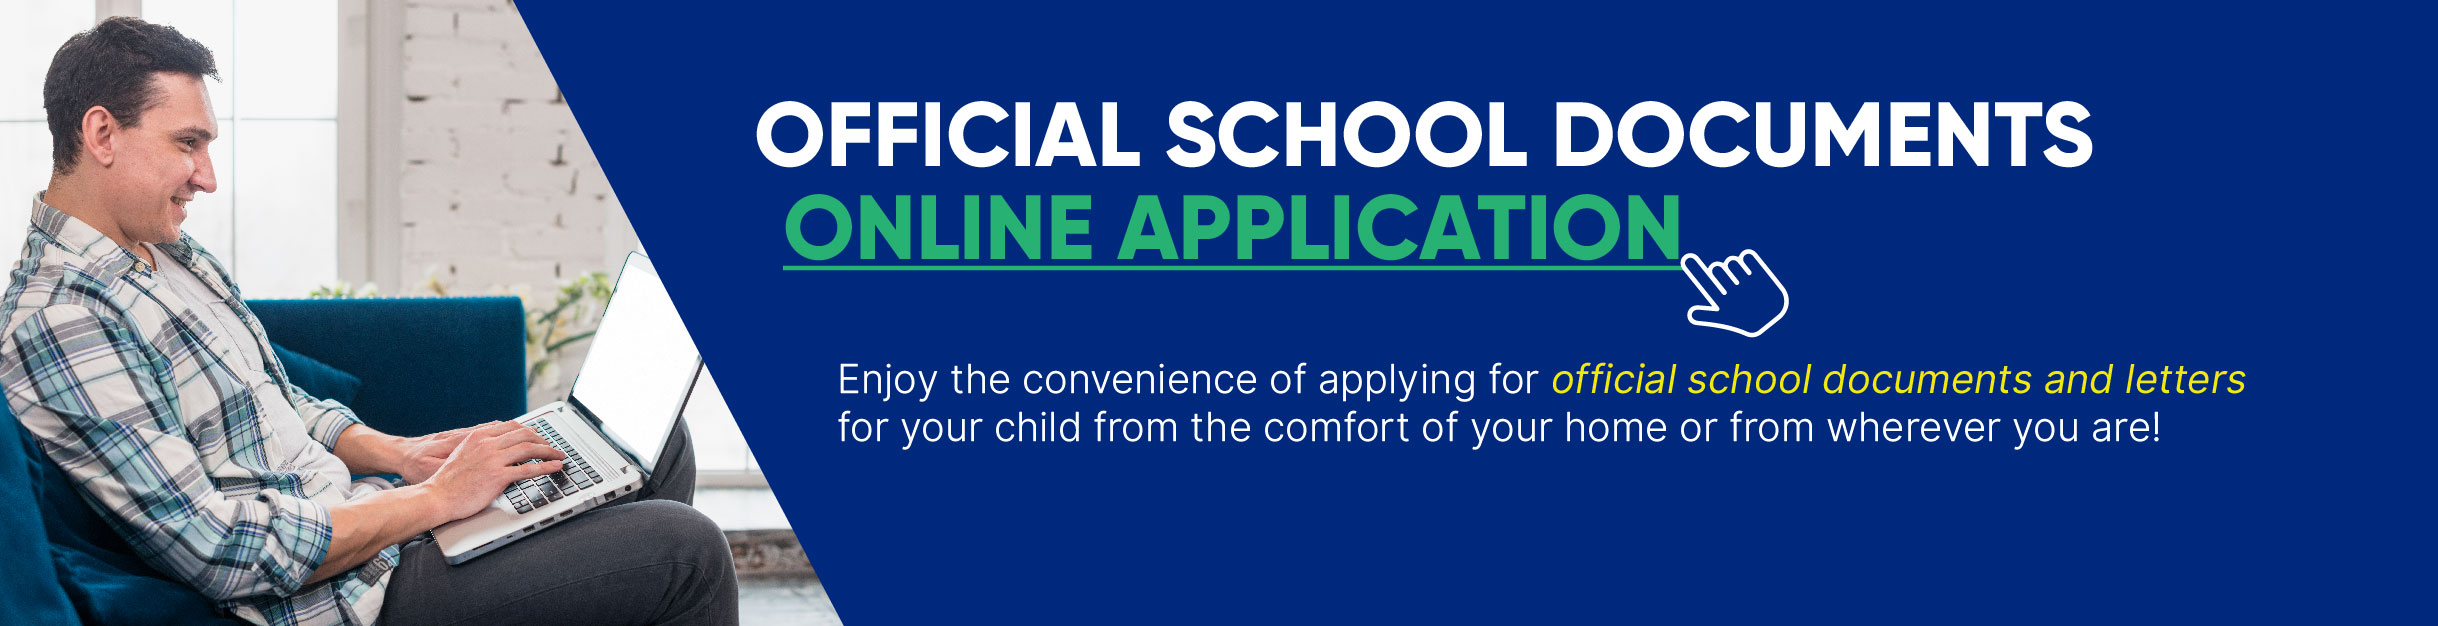 Online school application artwork 2020 07